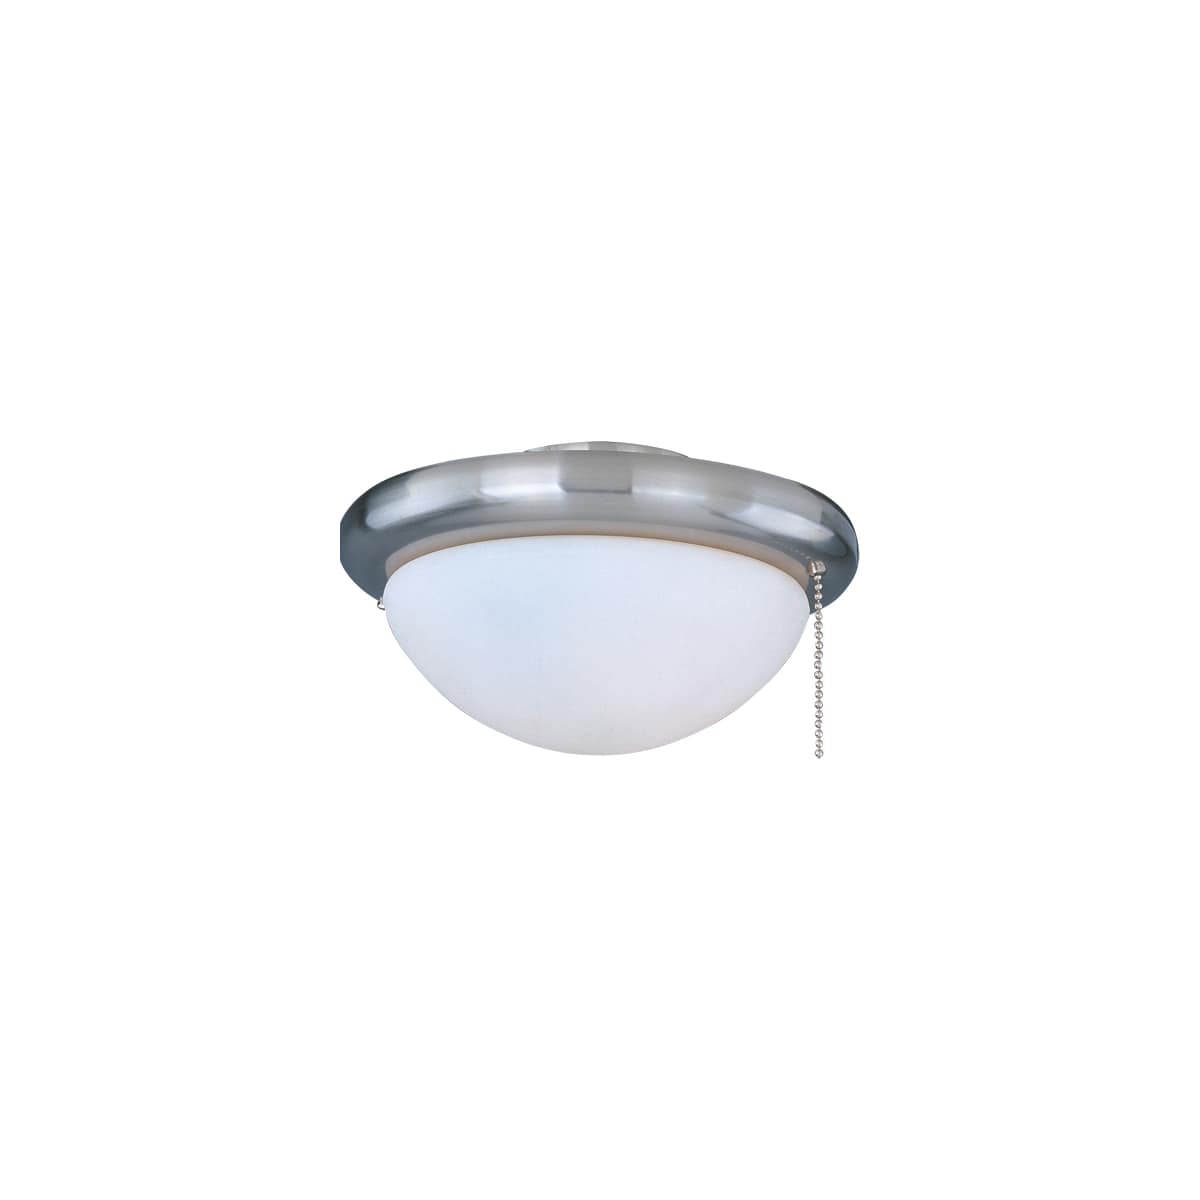 Maxim Fkt206sn Satin Nickel 1 Light Ceiling Fan Light Kit With